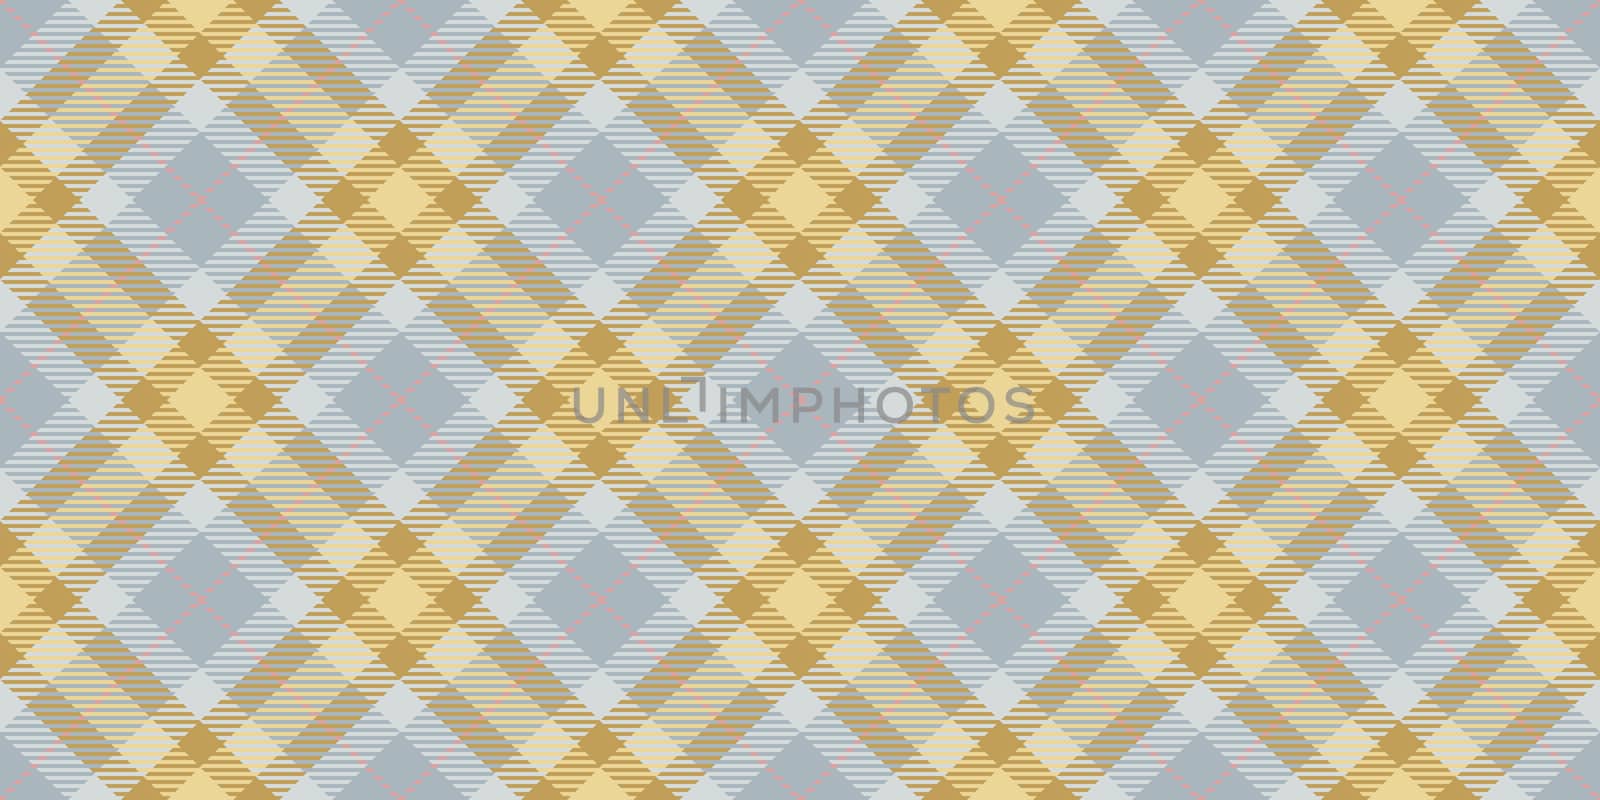 Yellow Gray Seamless Checkered Rhombuses Pattern. Plaid Rug Background. Tartan Texture.